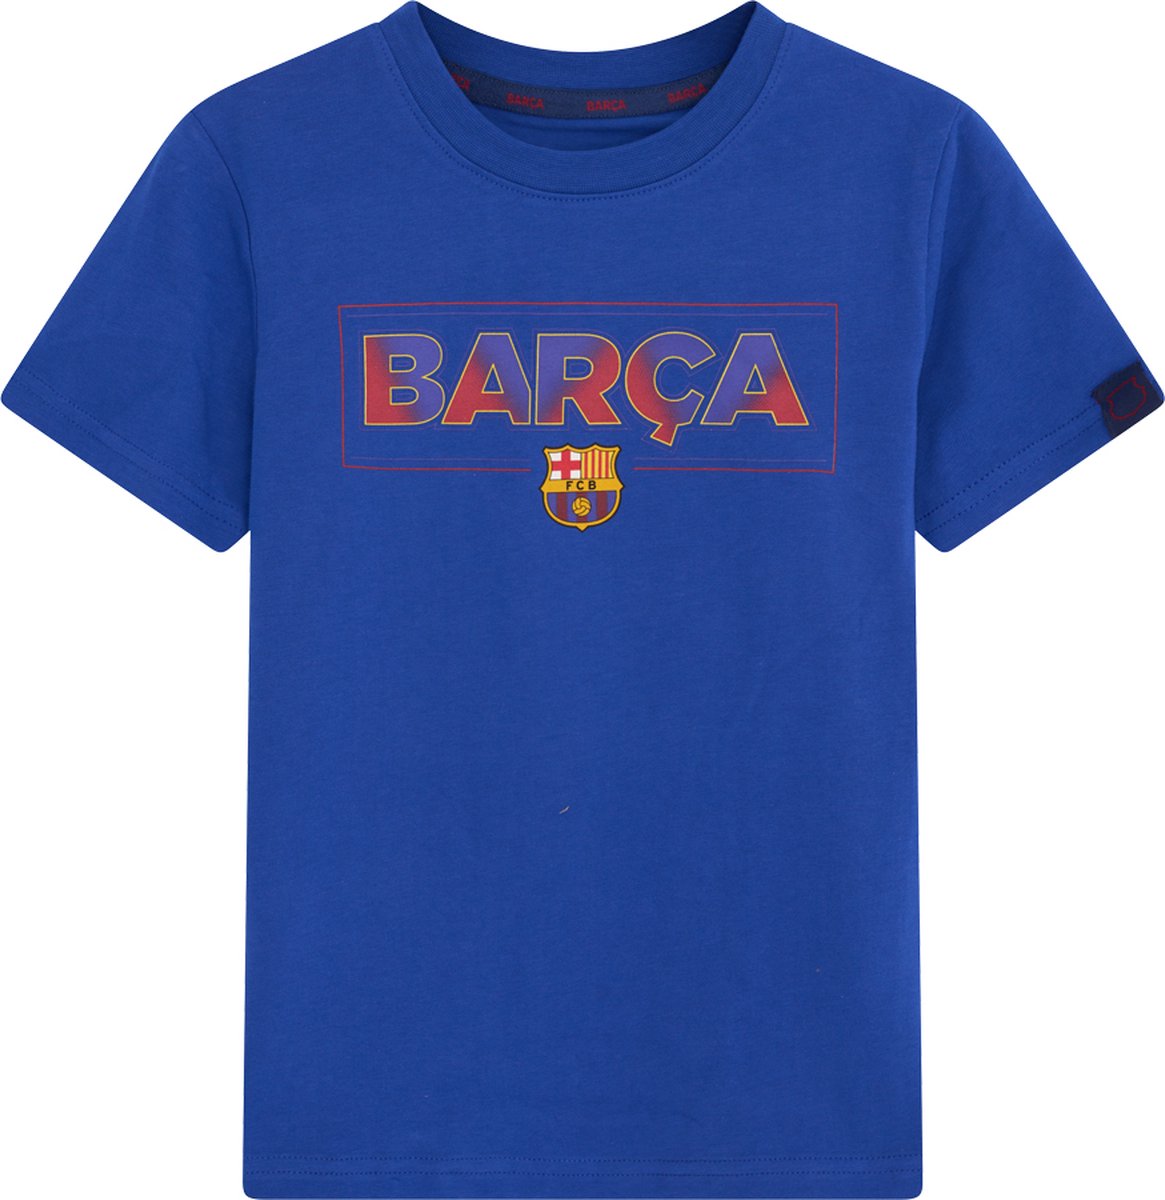 FC Barcelona T-shirt Barça - KIDS - 12 jaar (152) - blauw - officieel FC Barcelona product - 100% katoen